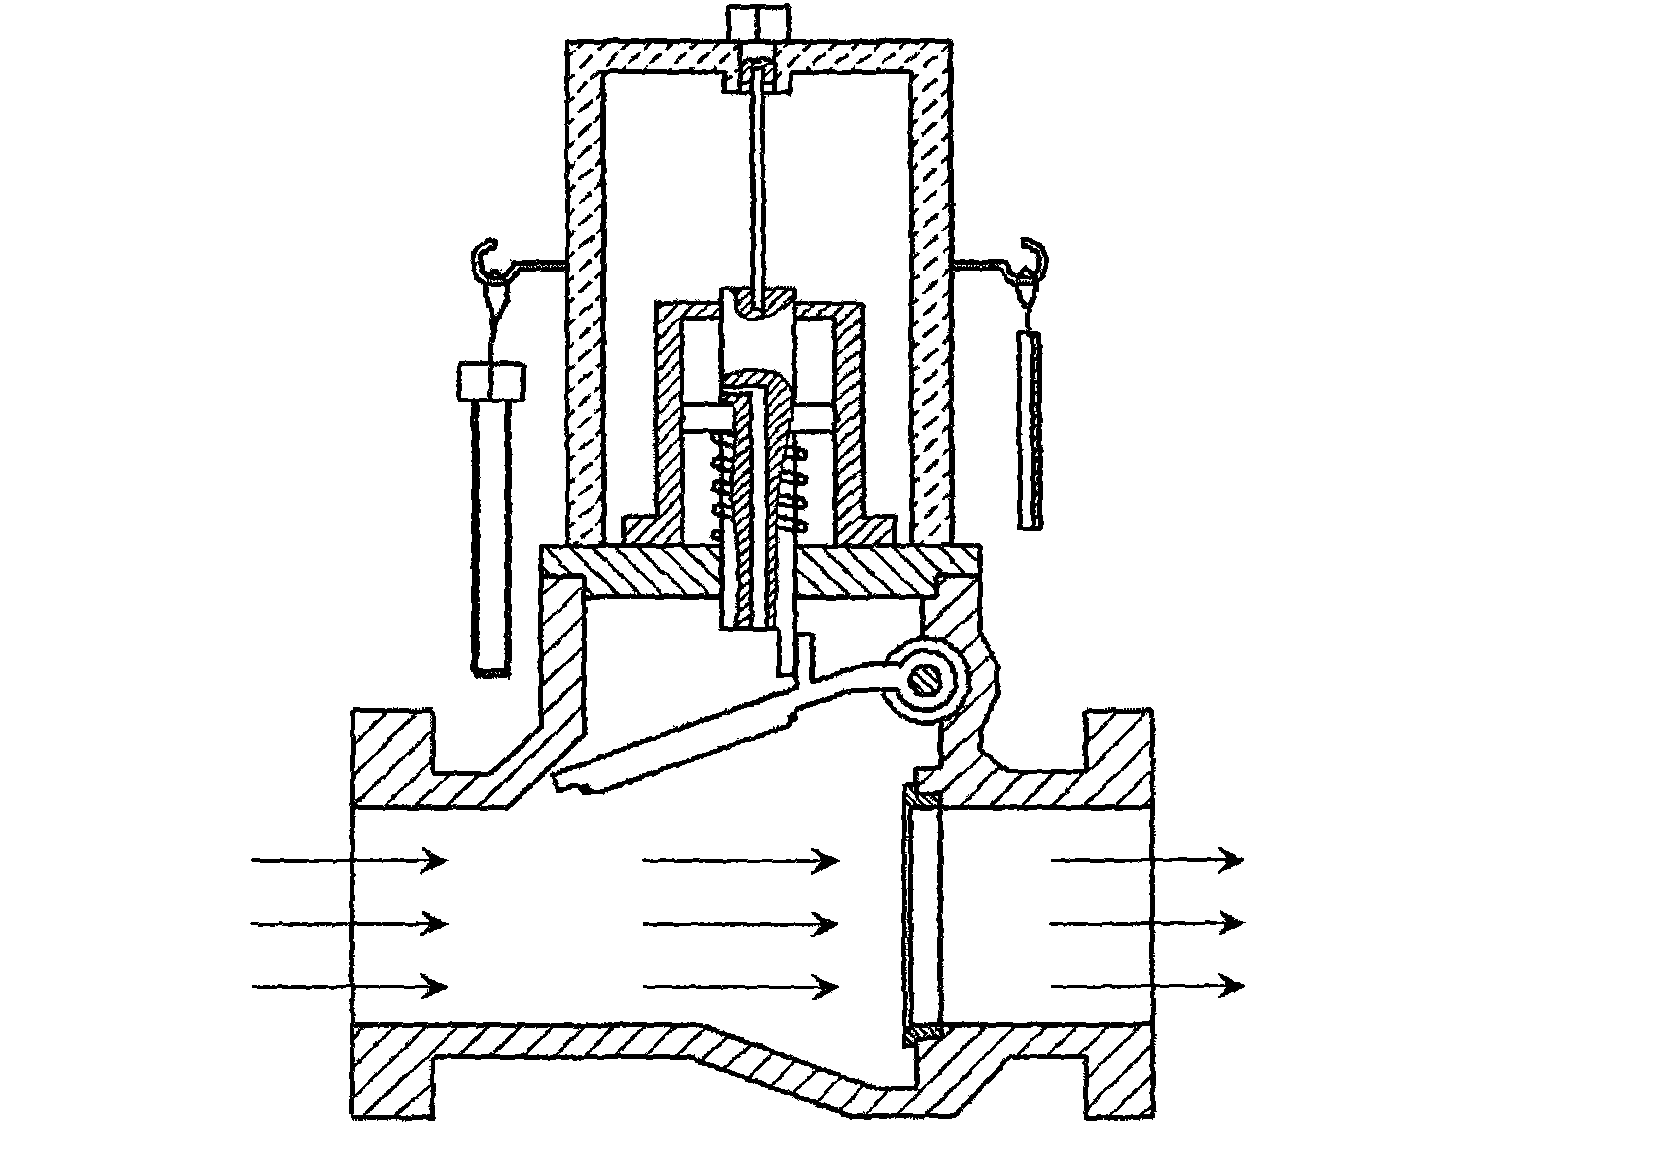 Novel low-pressure triggering pressure lever instability shut-off valve